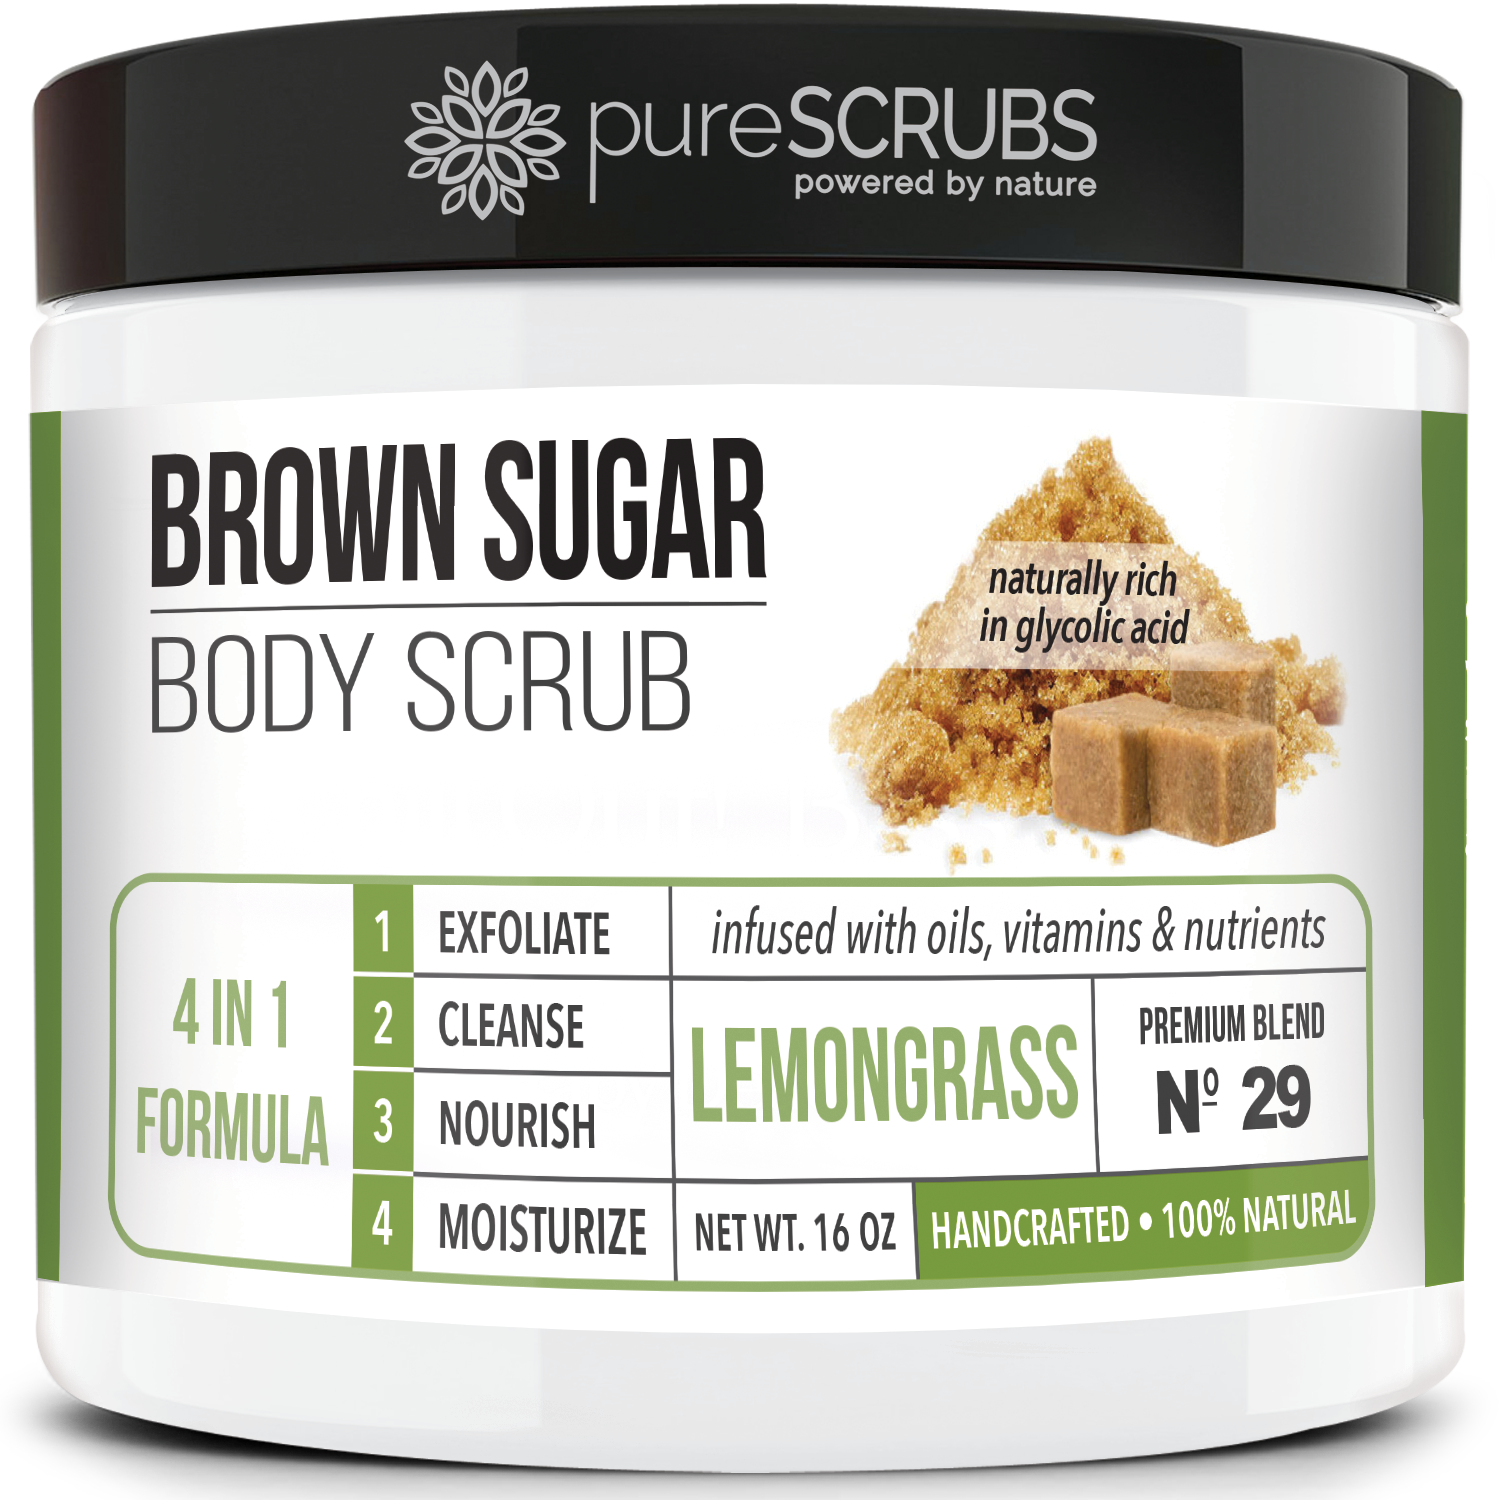 Lemongrass Body Scrub / Brown Sugar / Premium Blend #29